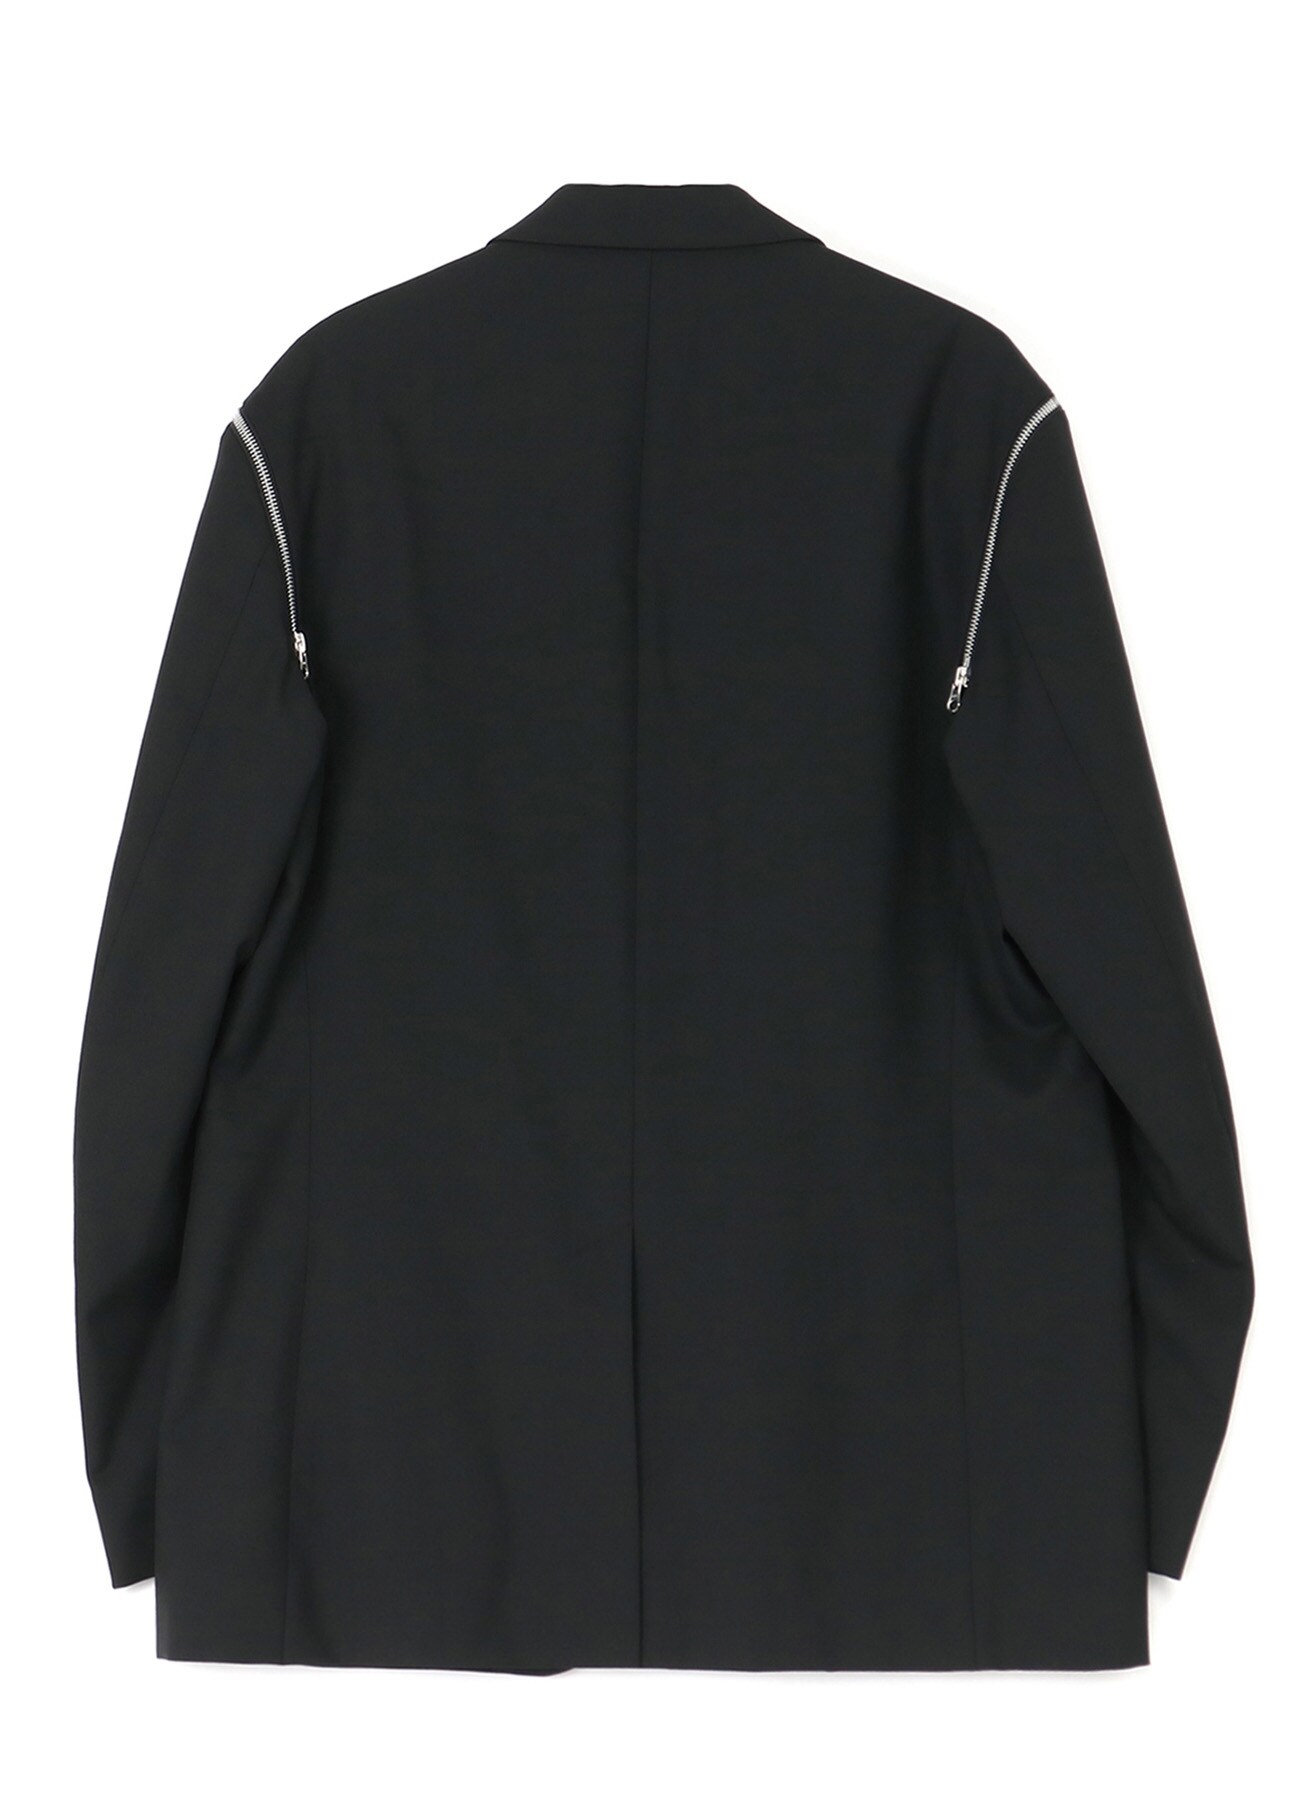 Wool/Polyester Gabardine Jacket with Shoulder Zippers